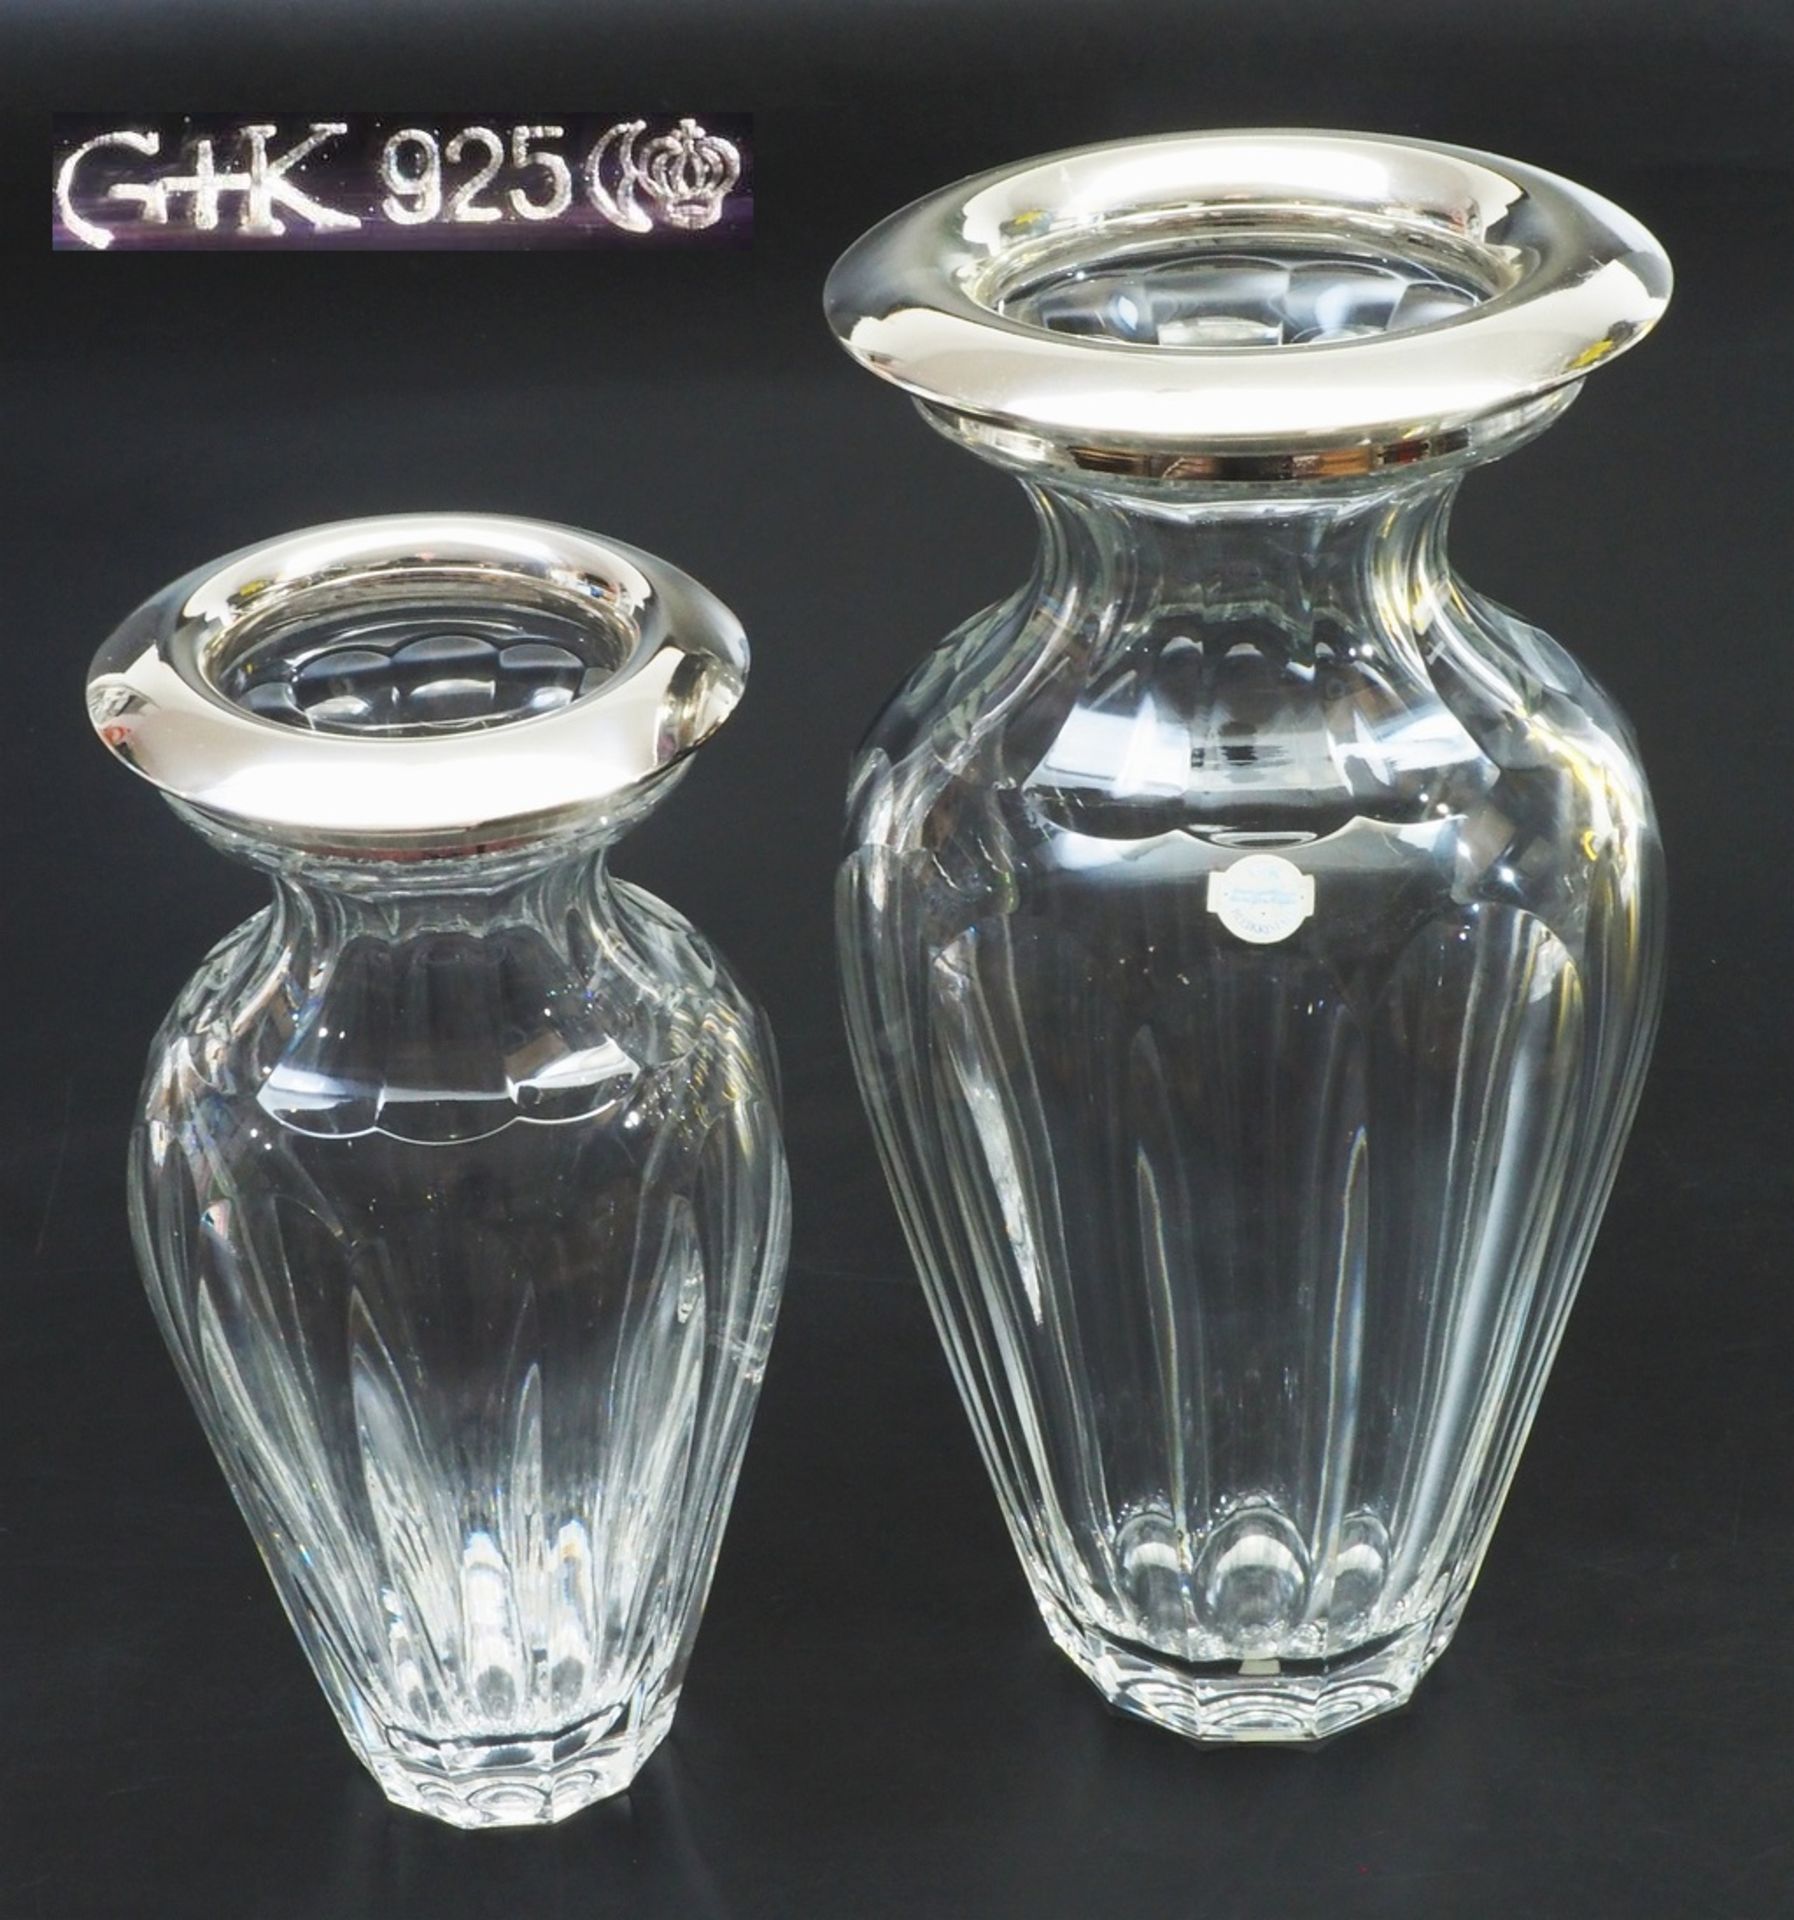 Zwei Kristallglasvasen mit 925er Sterlingsilbermontur.